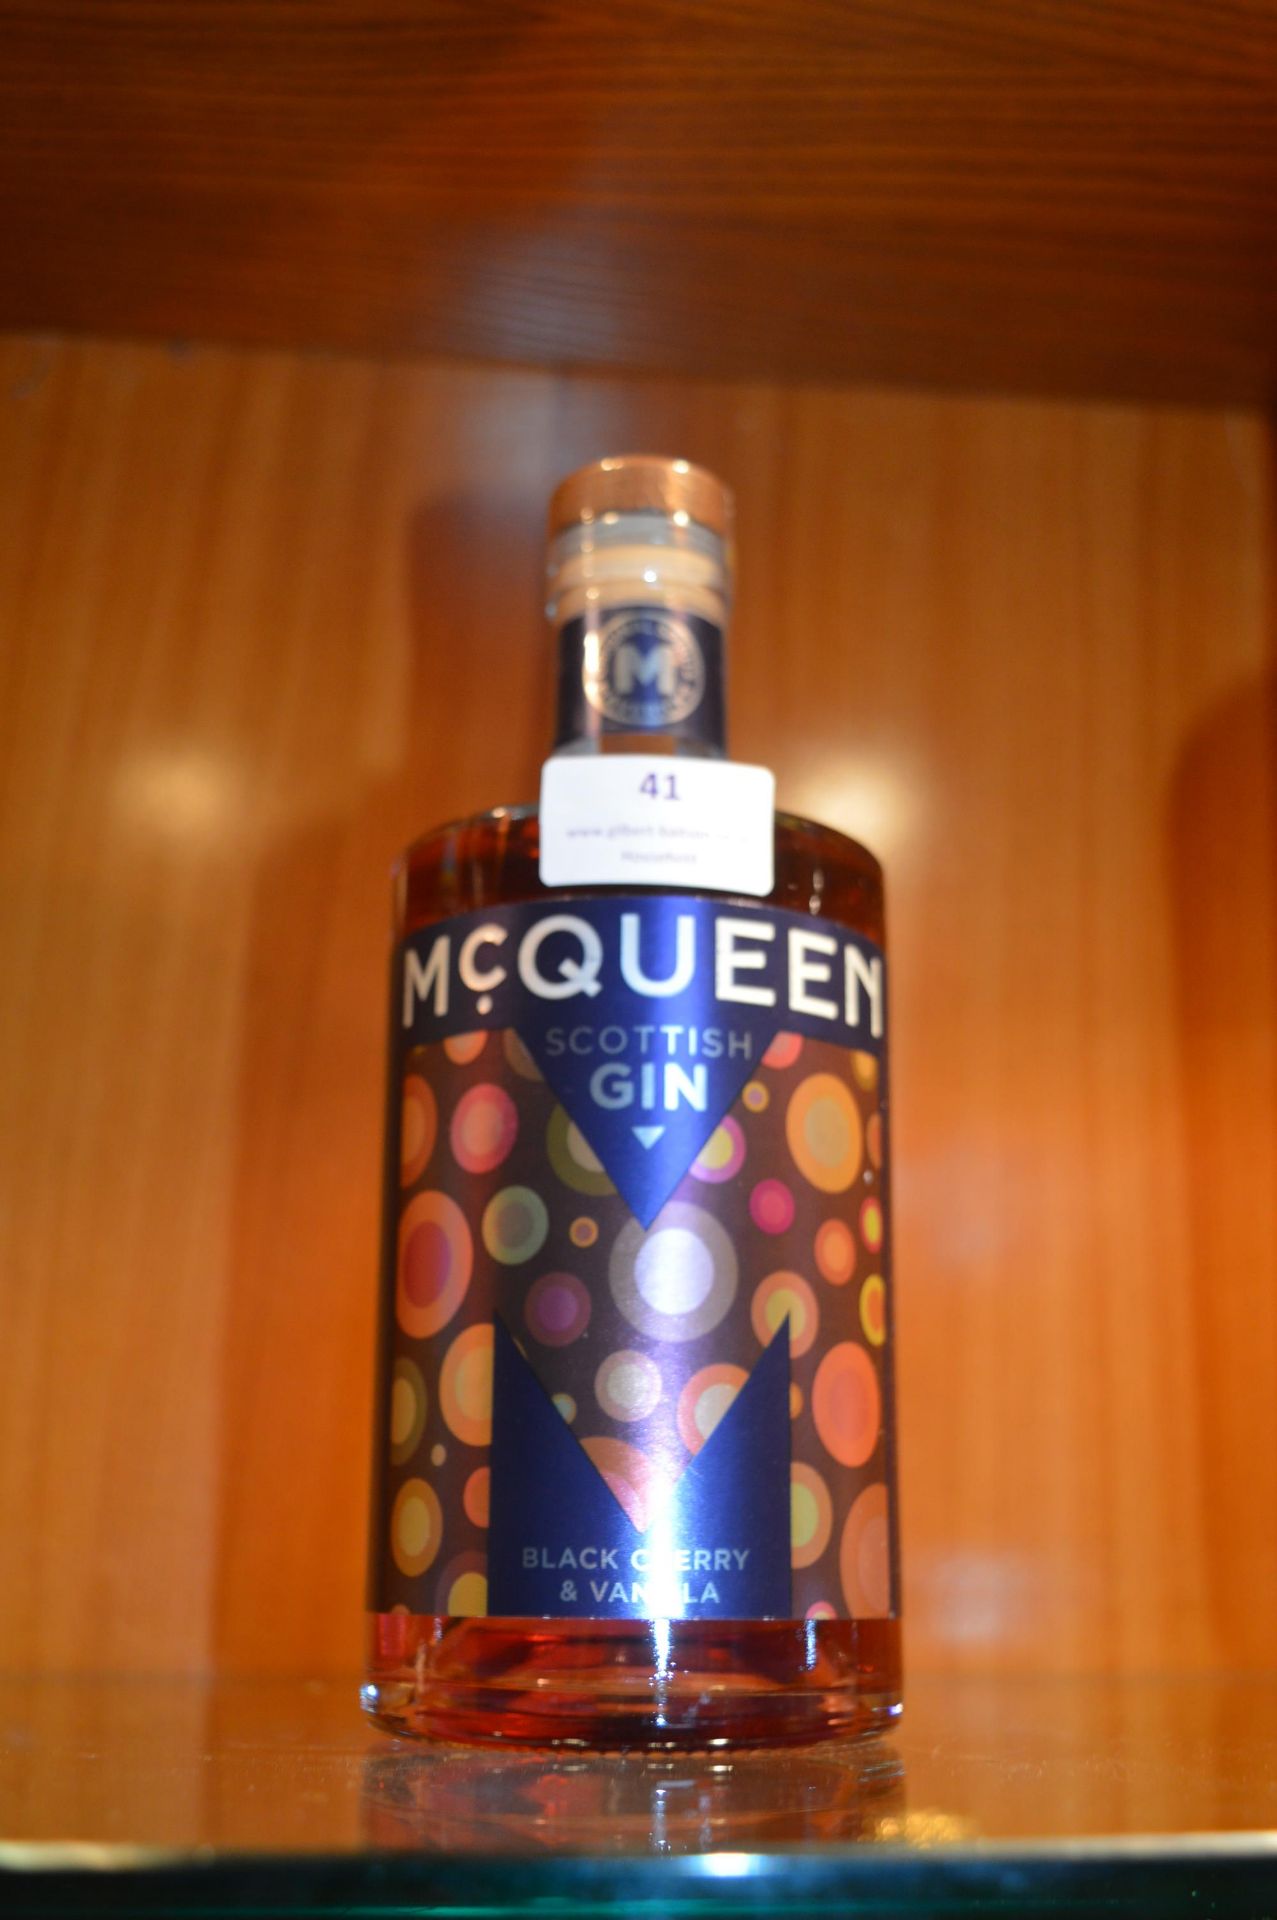 McQueen Black Cherry and Vanilla Scottish Gin 70cl